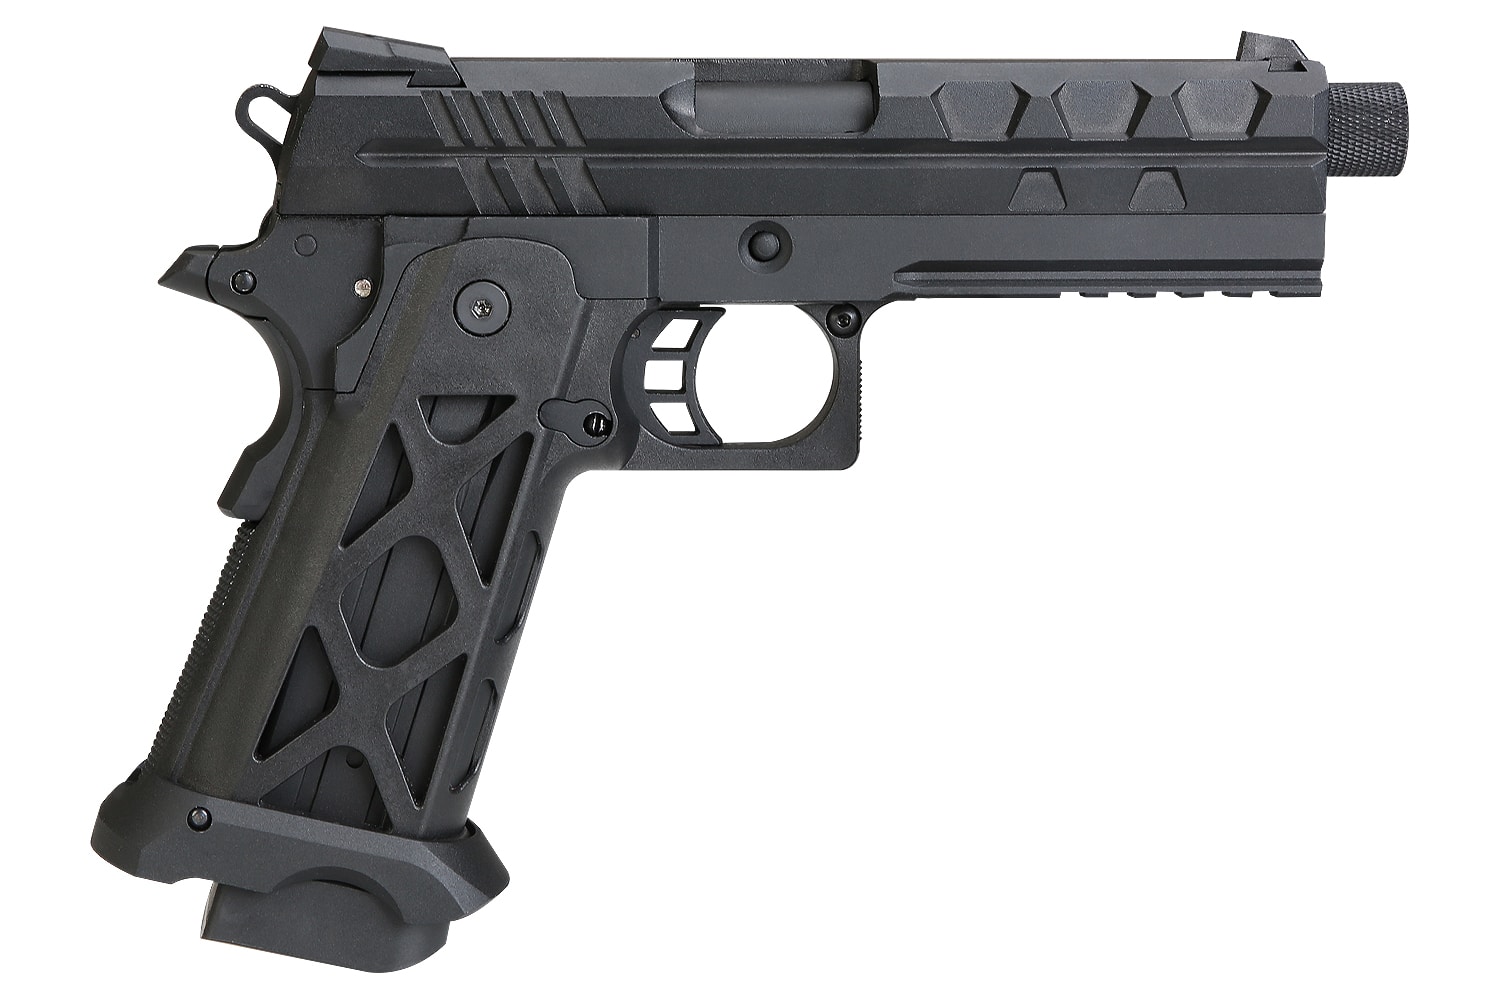 SRC Tartarus MKII 4.3 Hi-capa GBB pistol - With Hard case